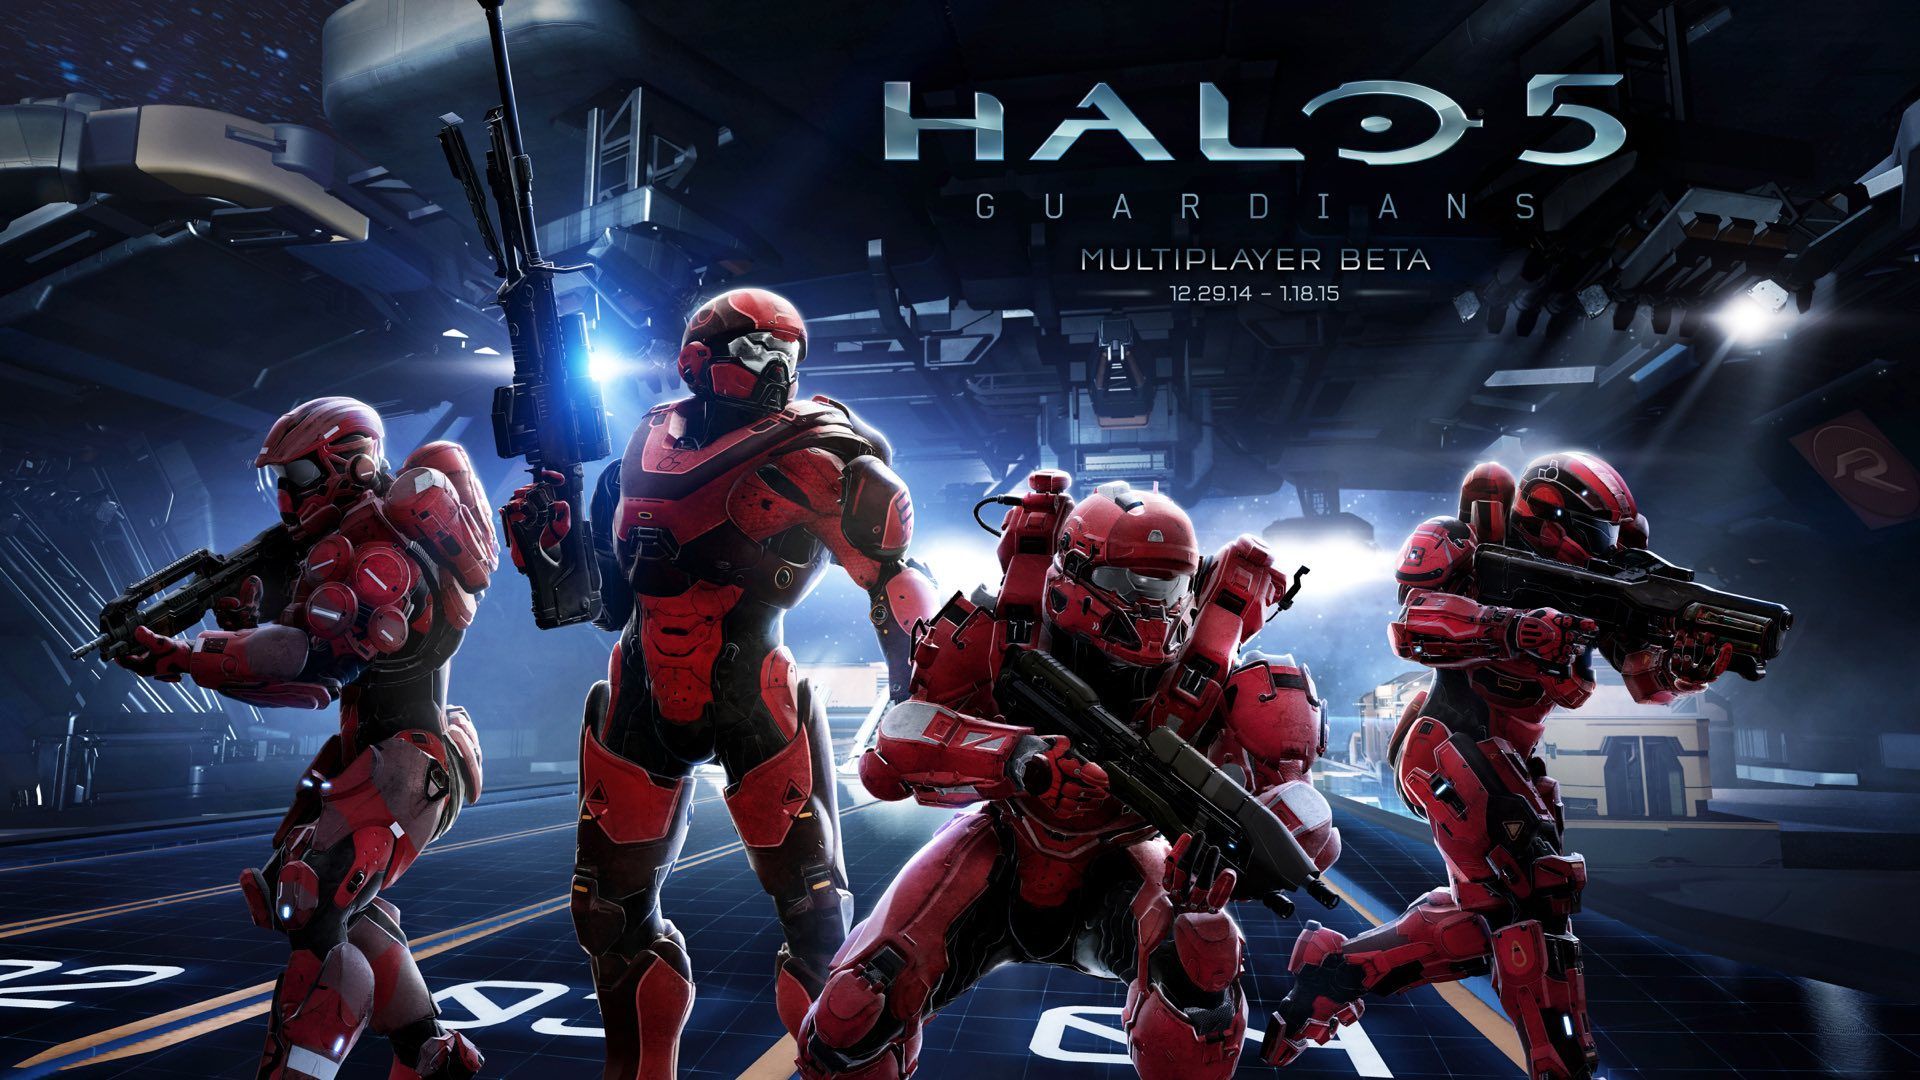 Halo 5 Guardians HD Wallpaper, Halo 5 Guardians Images Cool